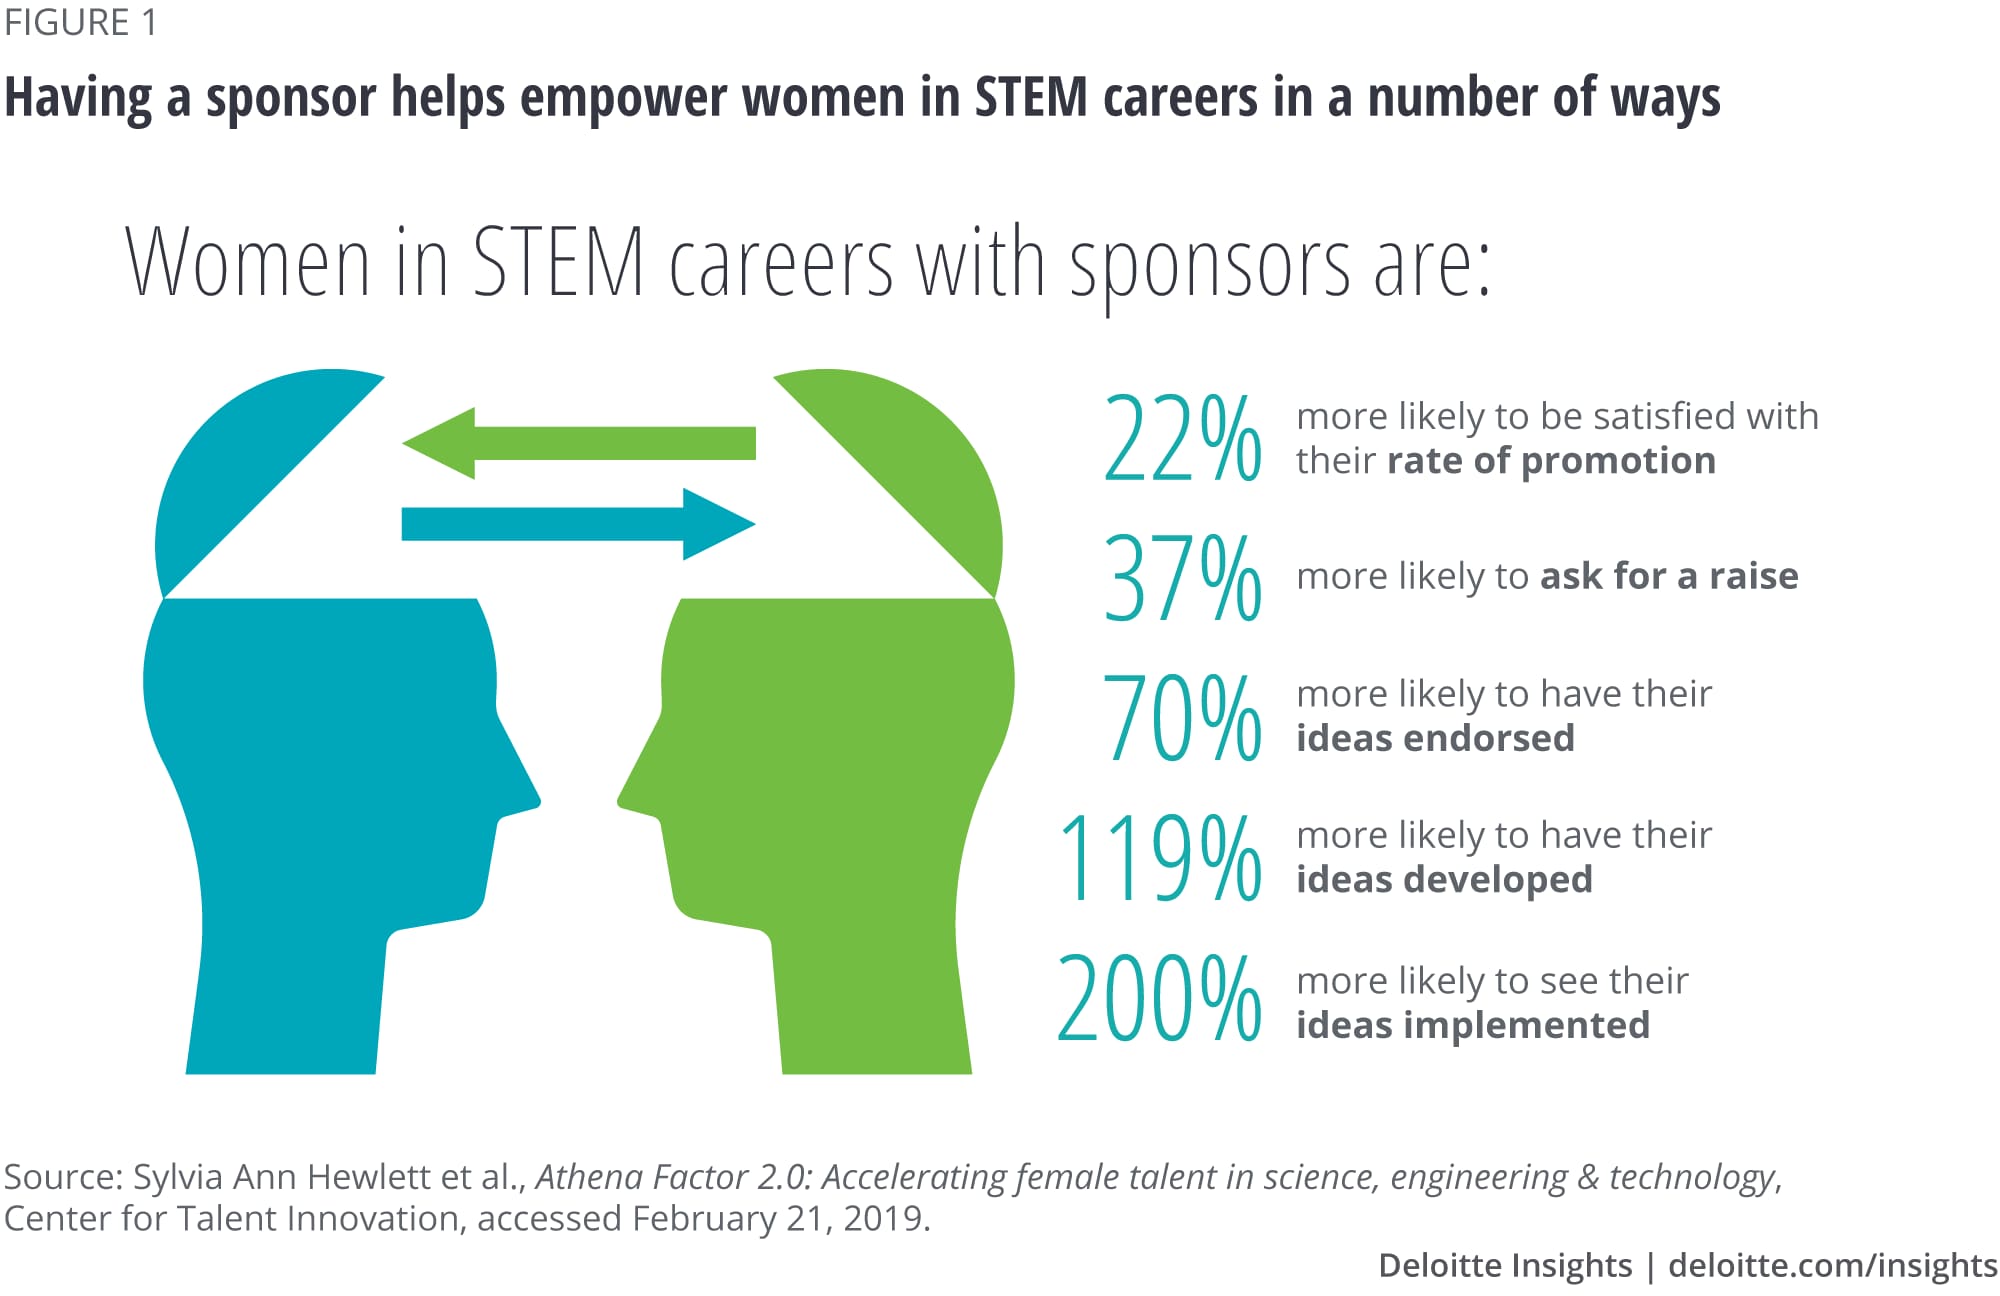 Having a sponsor helps empower women in STEM careers in a number of ways